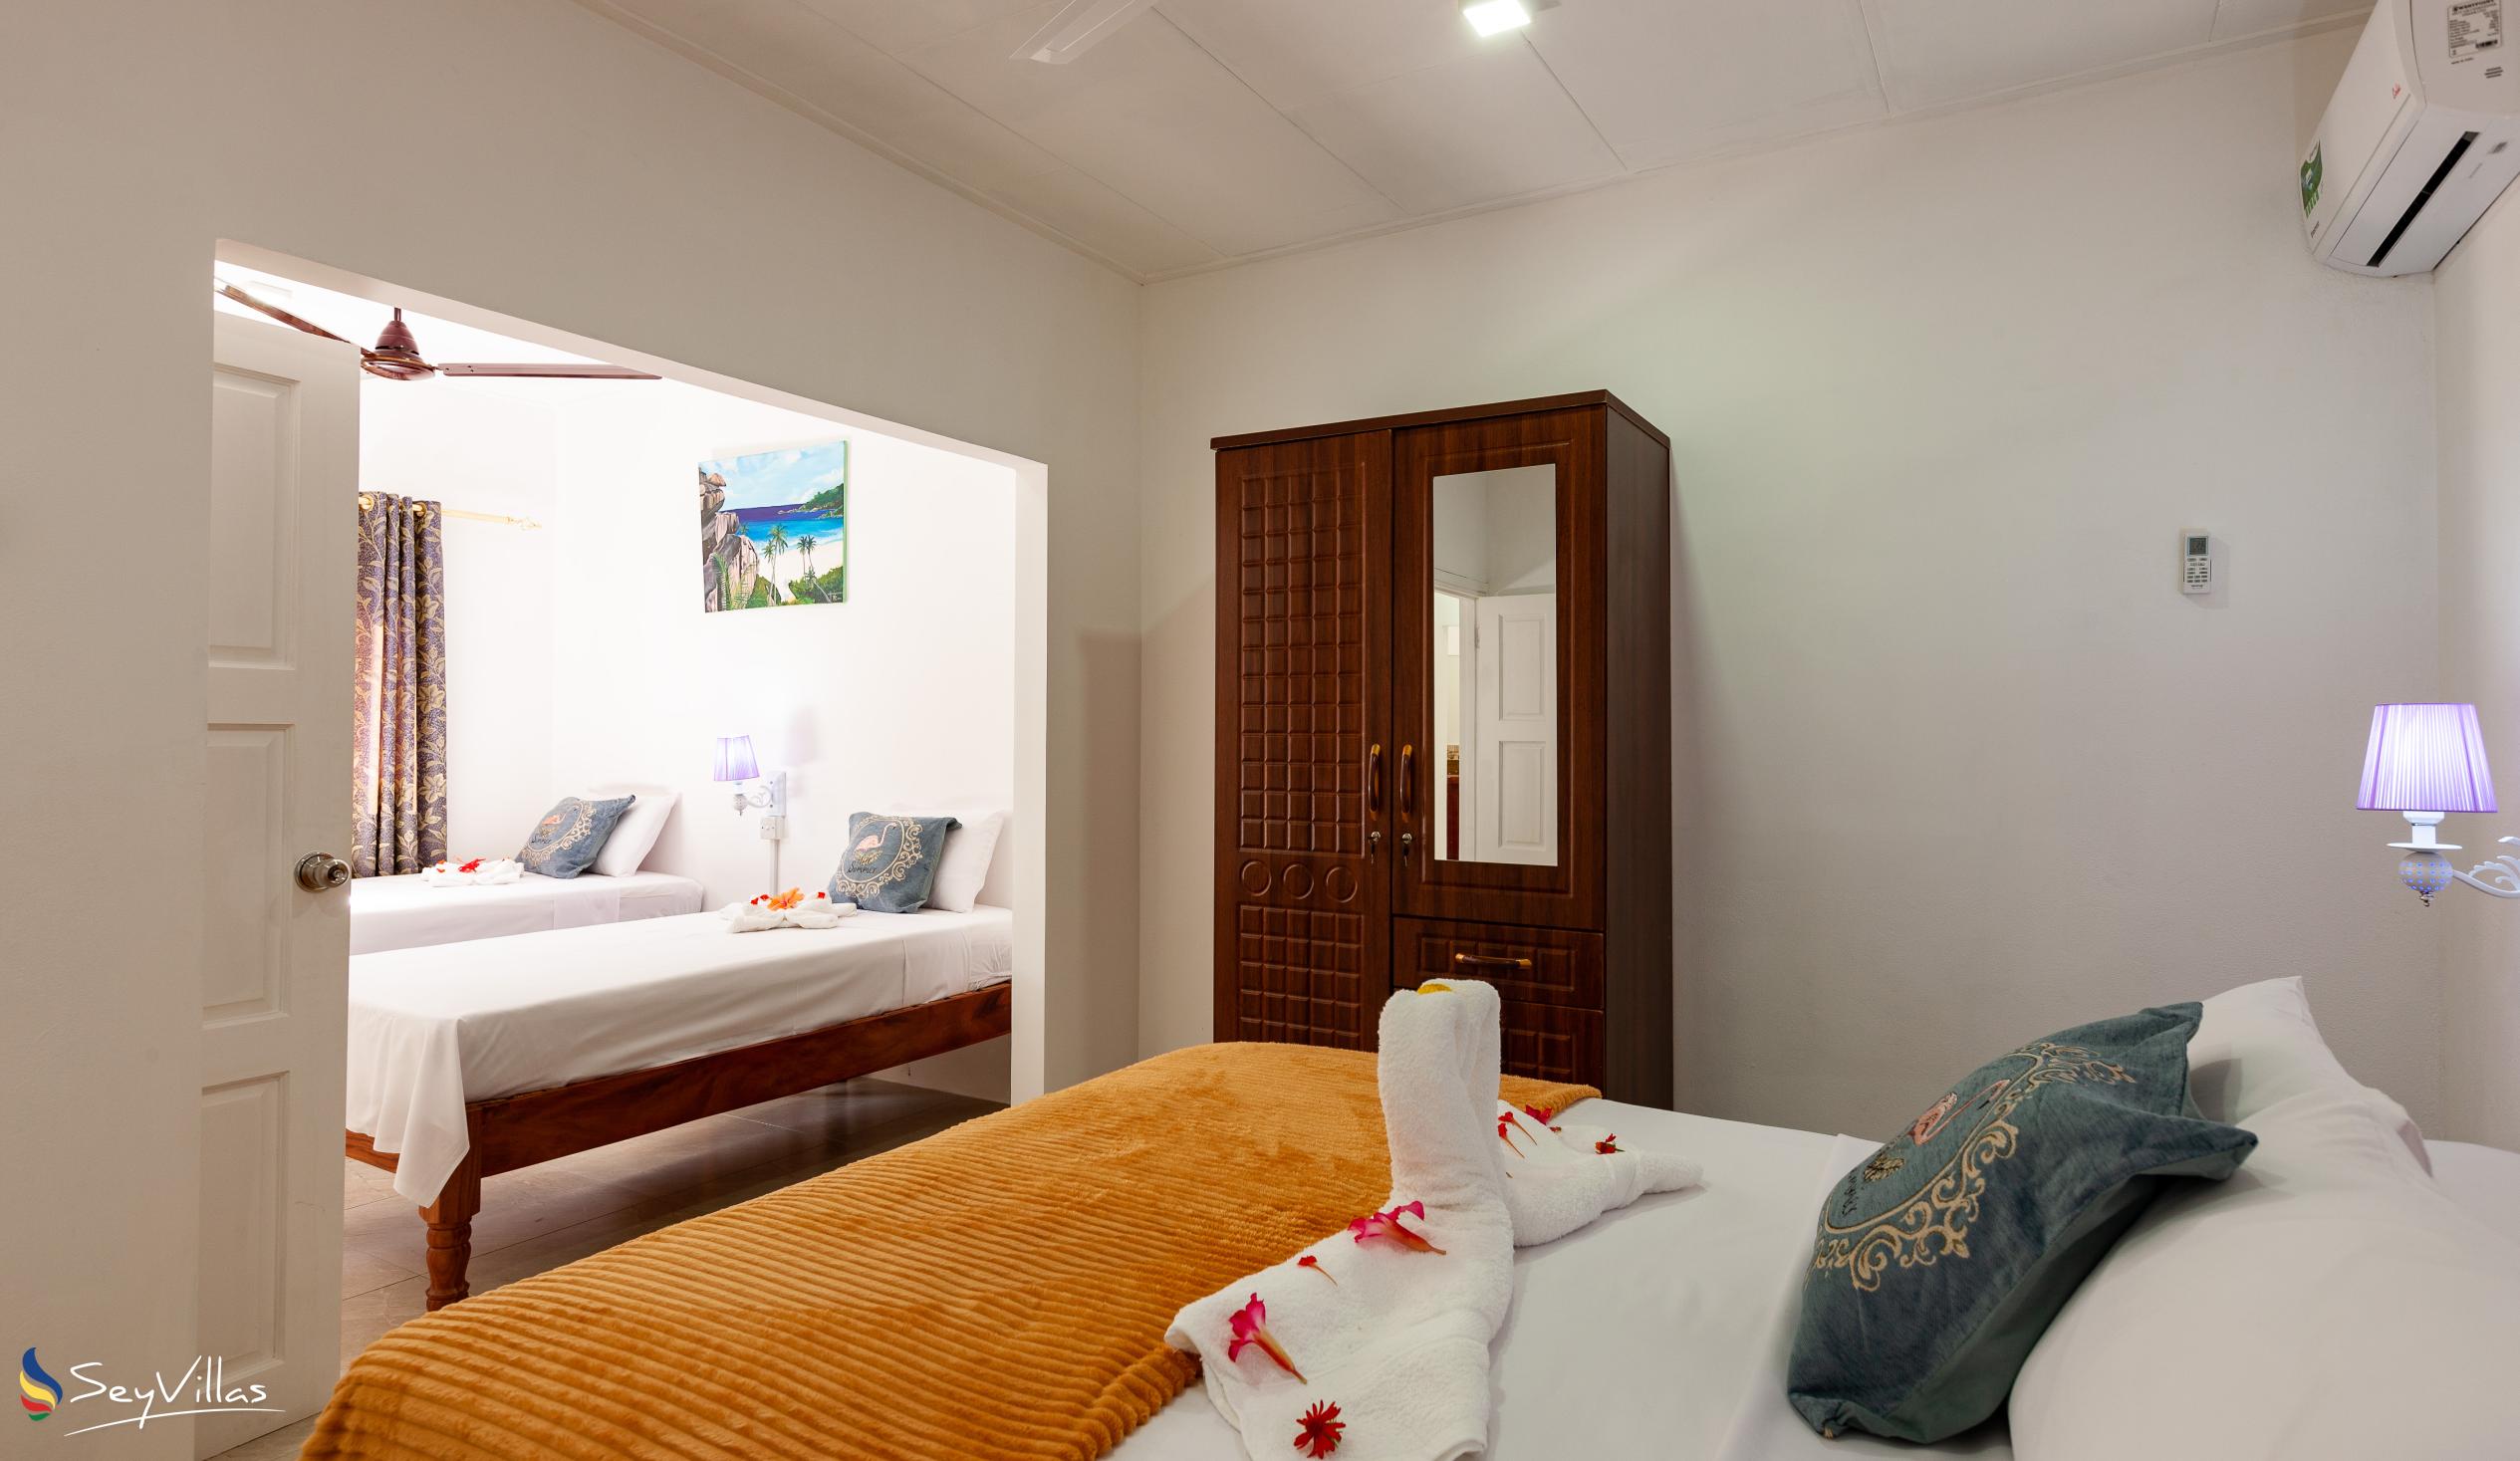 Foto 53: Anse Grosse Roche Beach Villa - Appartement Familiale 2 chambres - La Digue (Seychelles)